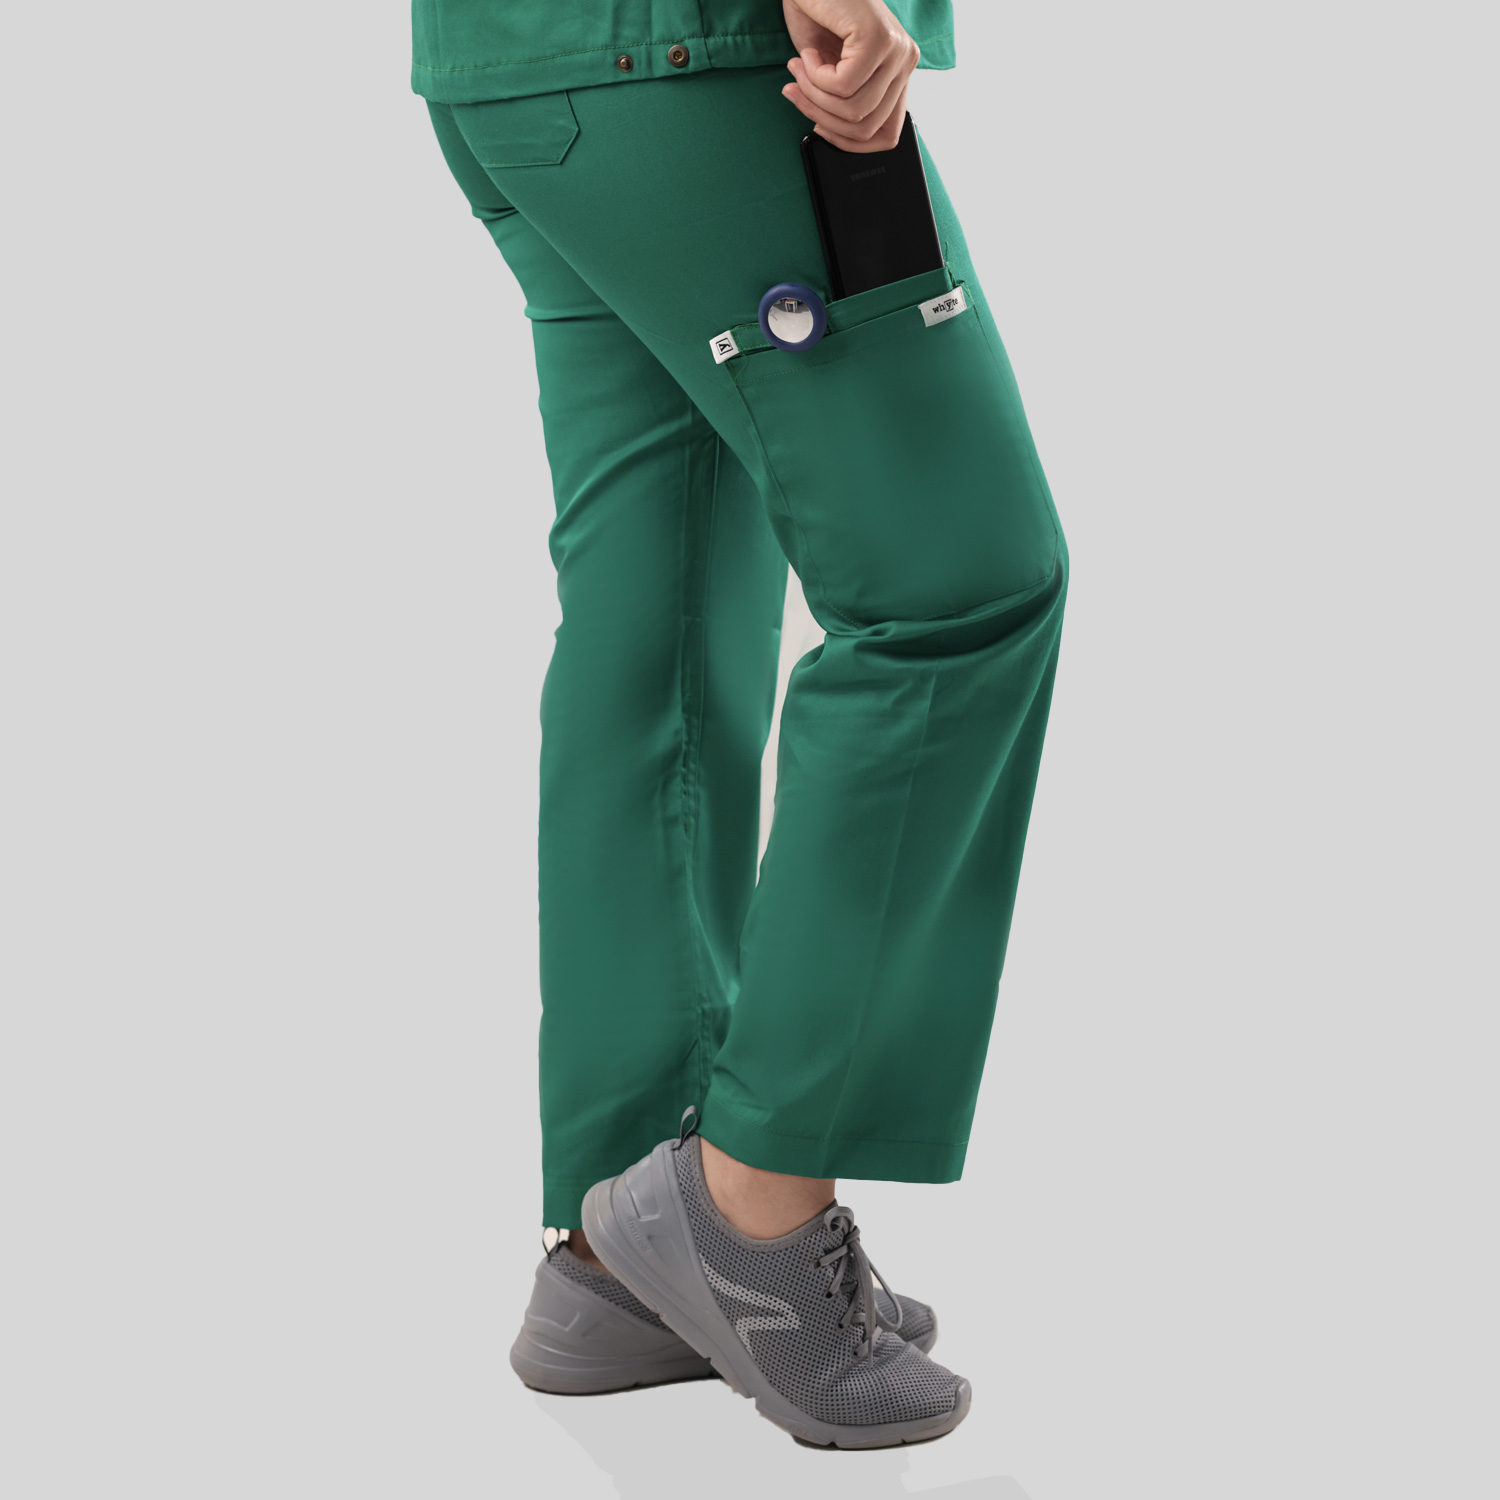 classic edition-2.0 - jungle green- pant- 3pockets